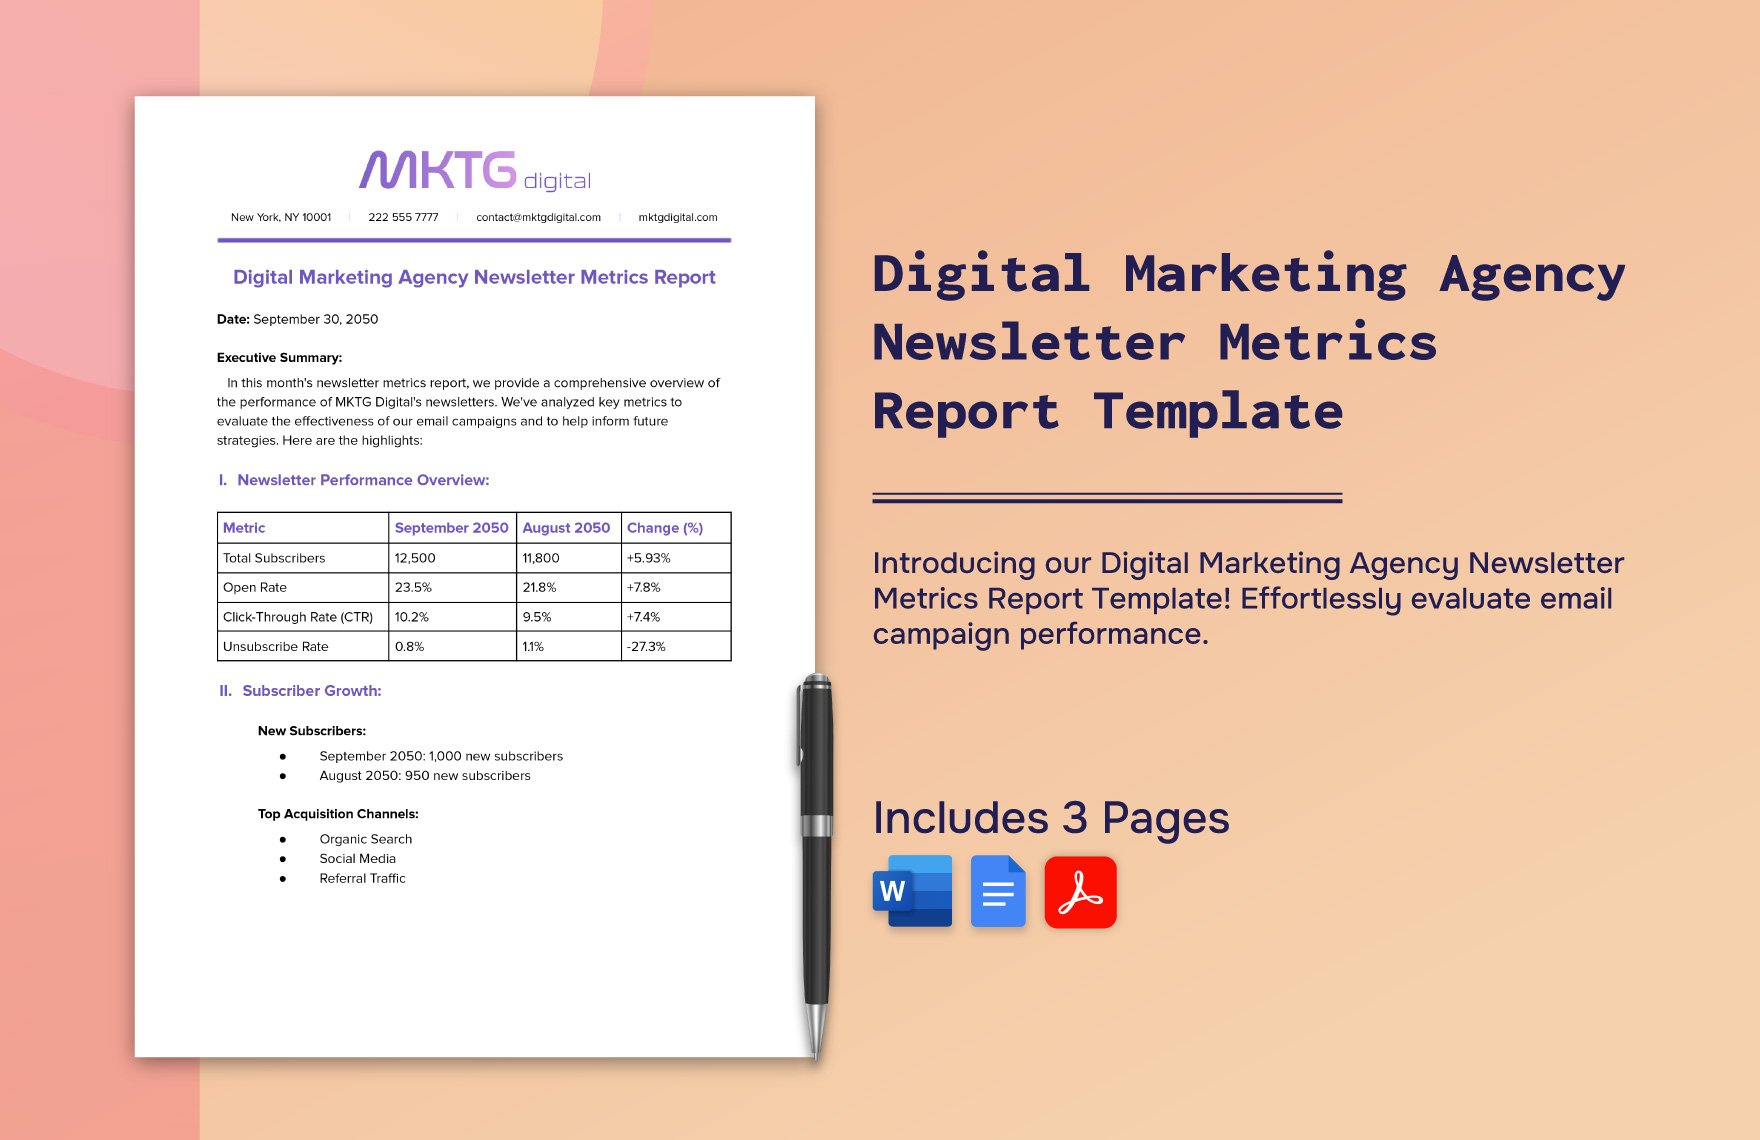 Digital Marketing Agency Newsletter Metrics Report Template